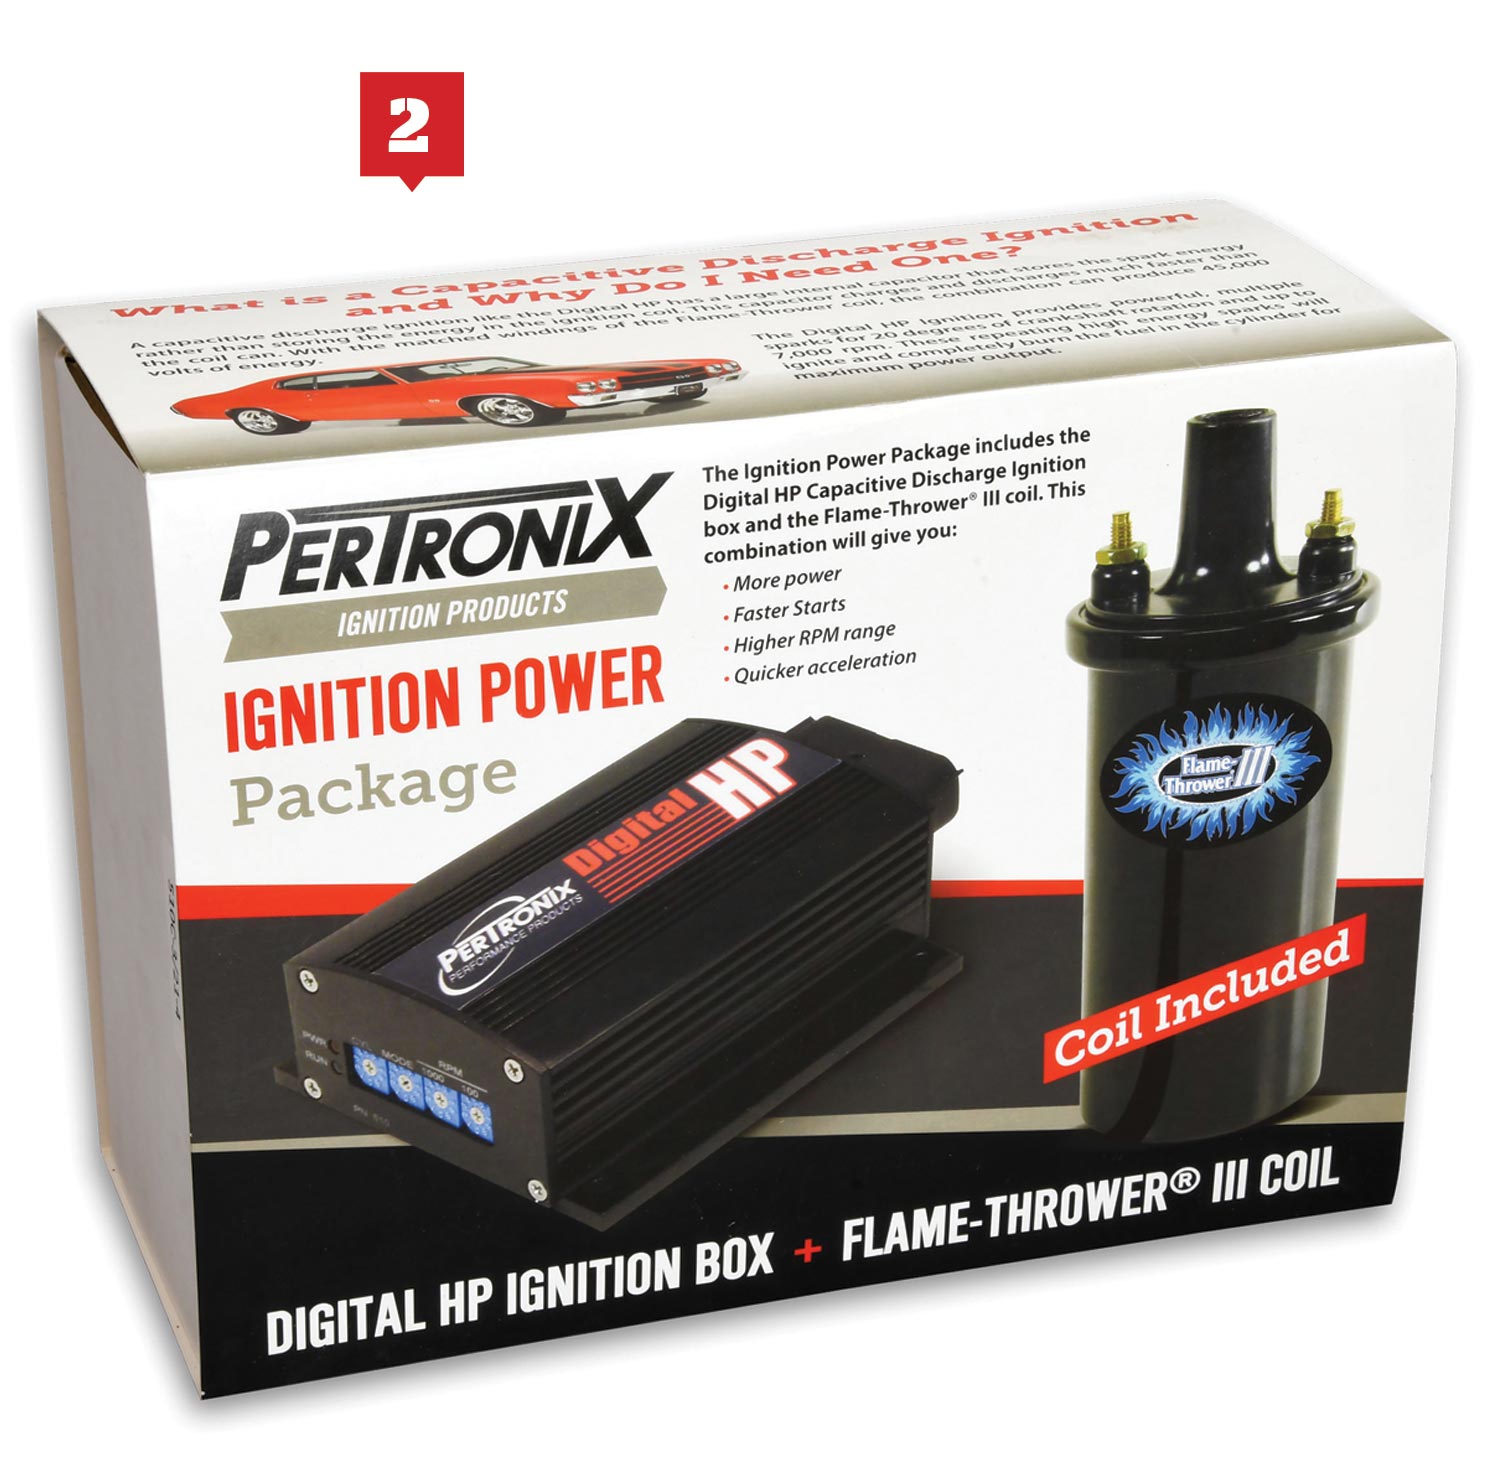 PerTronix Digital HP Ignition Box